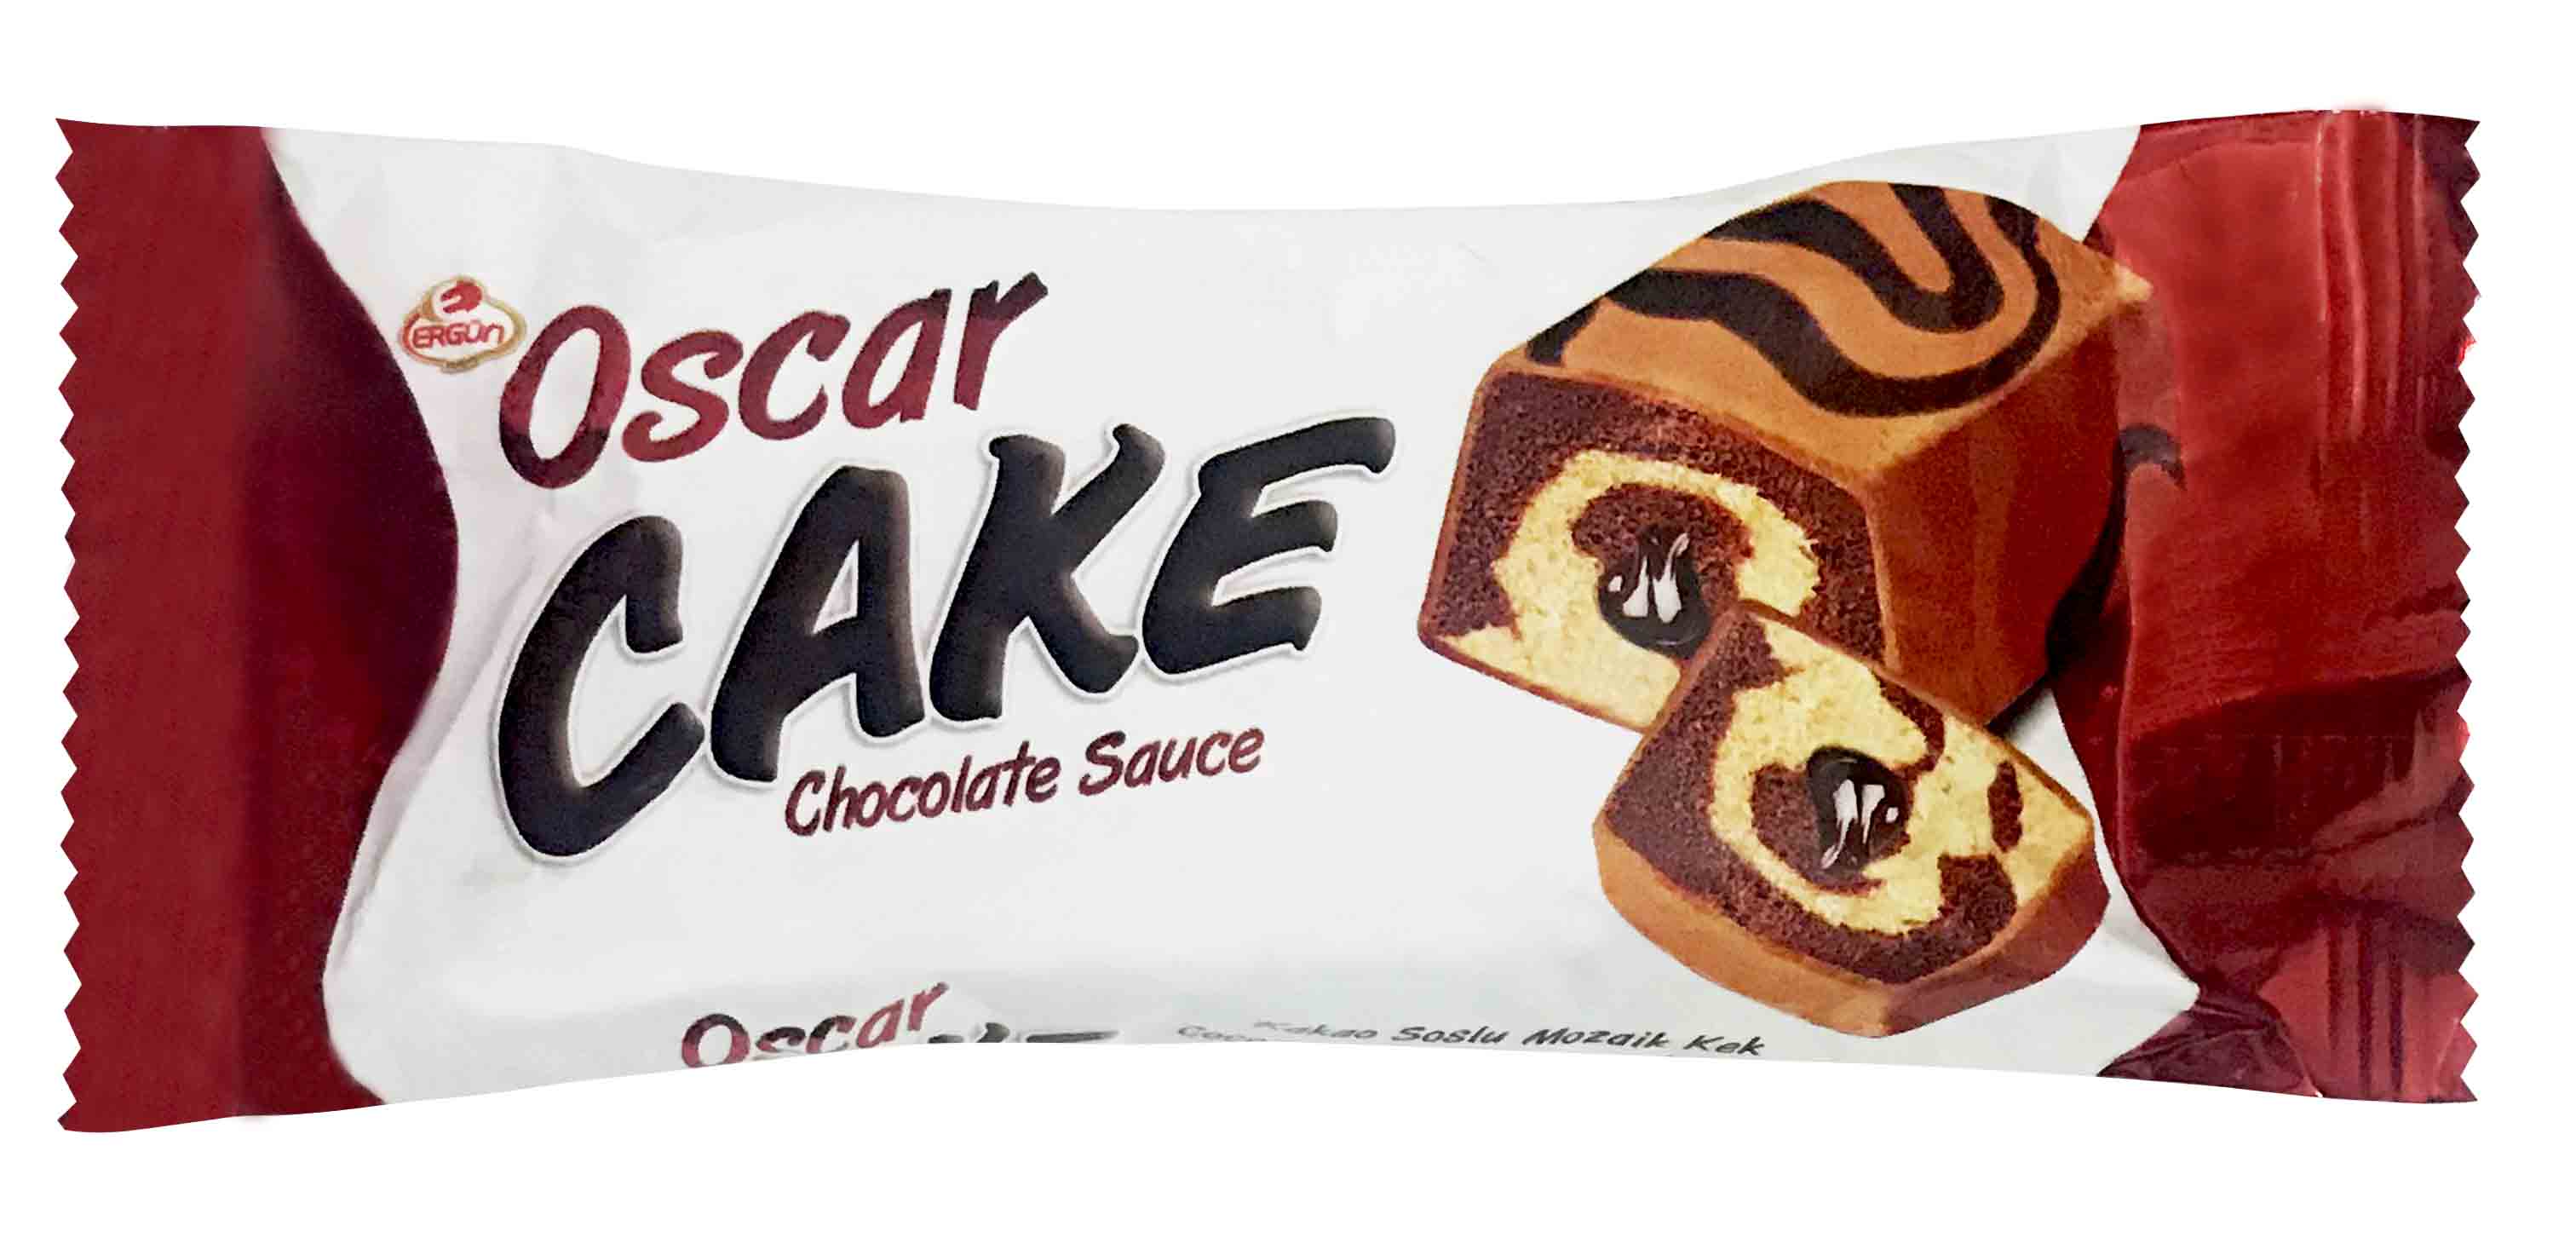 OSCAR CREAM FILLED MOSAIC CAKE